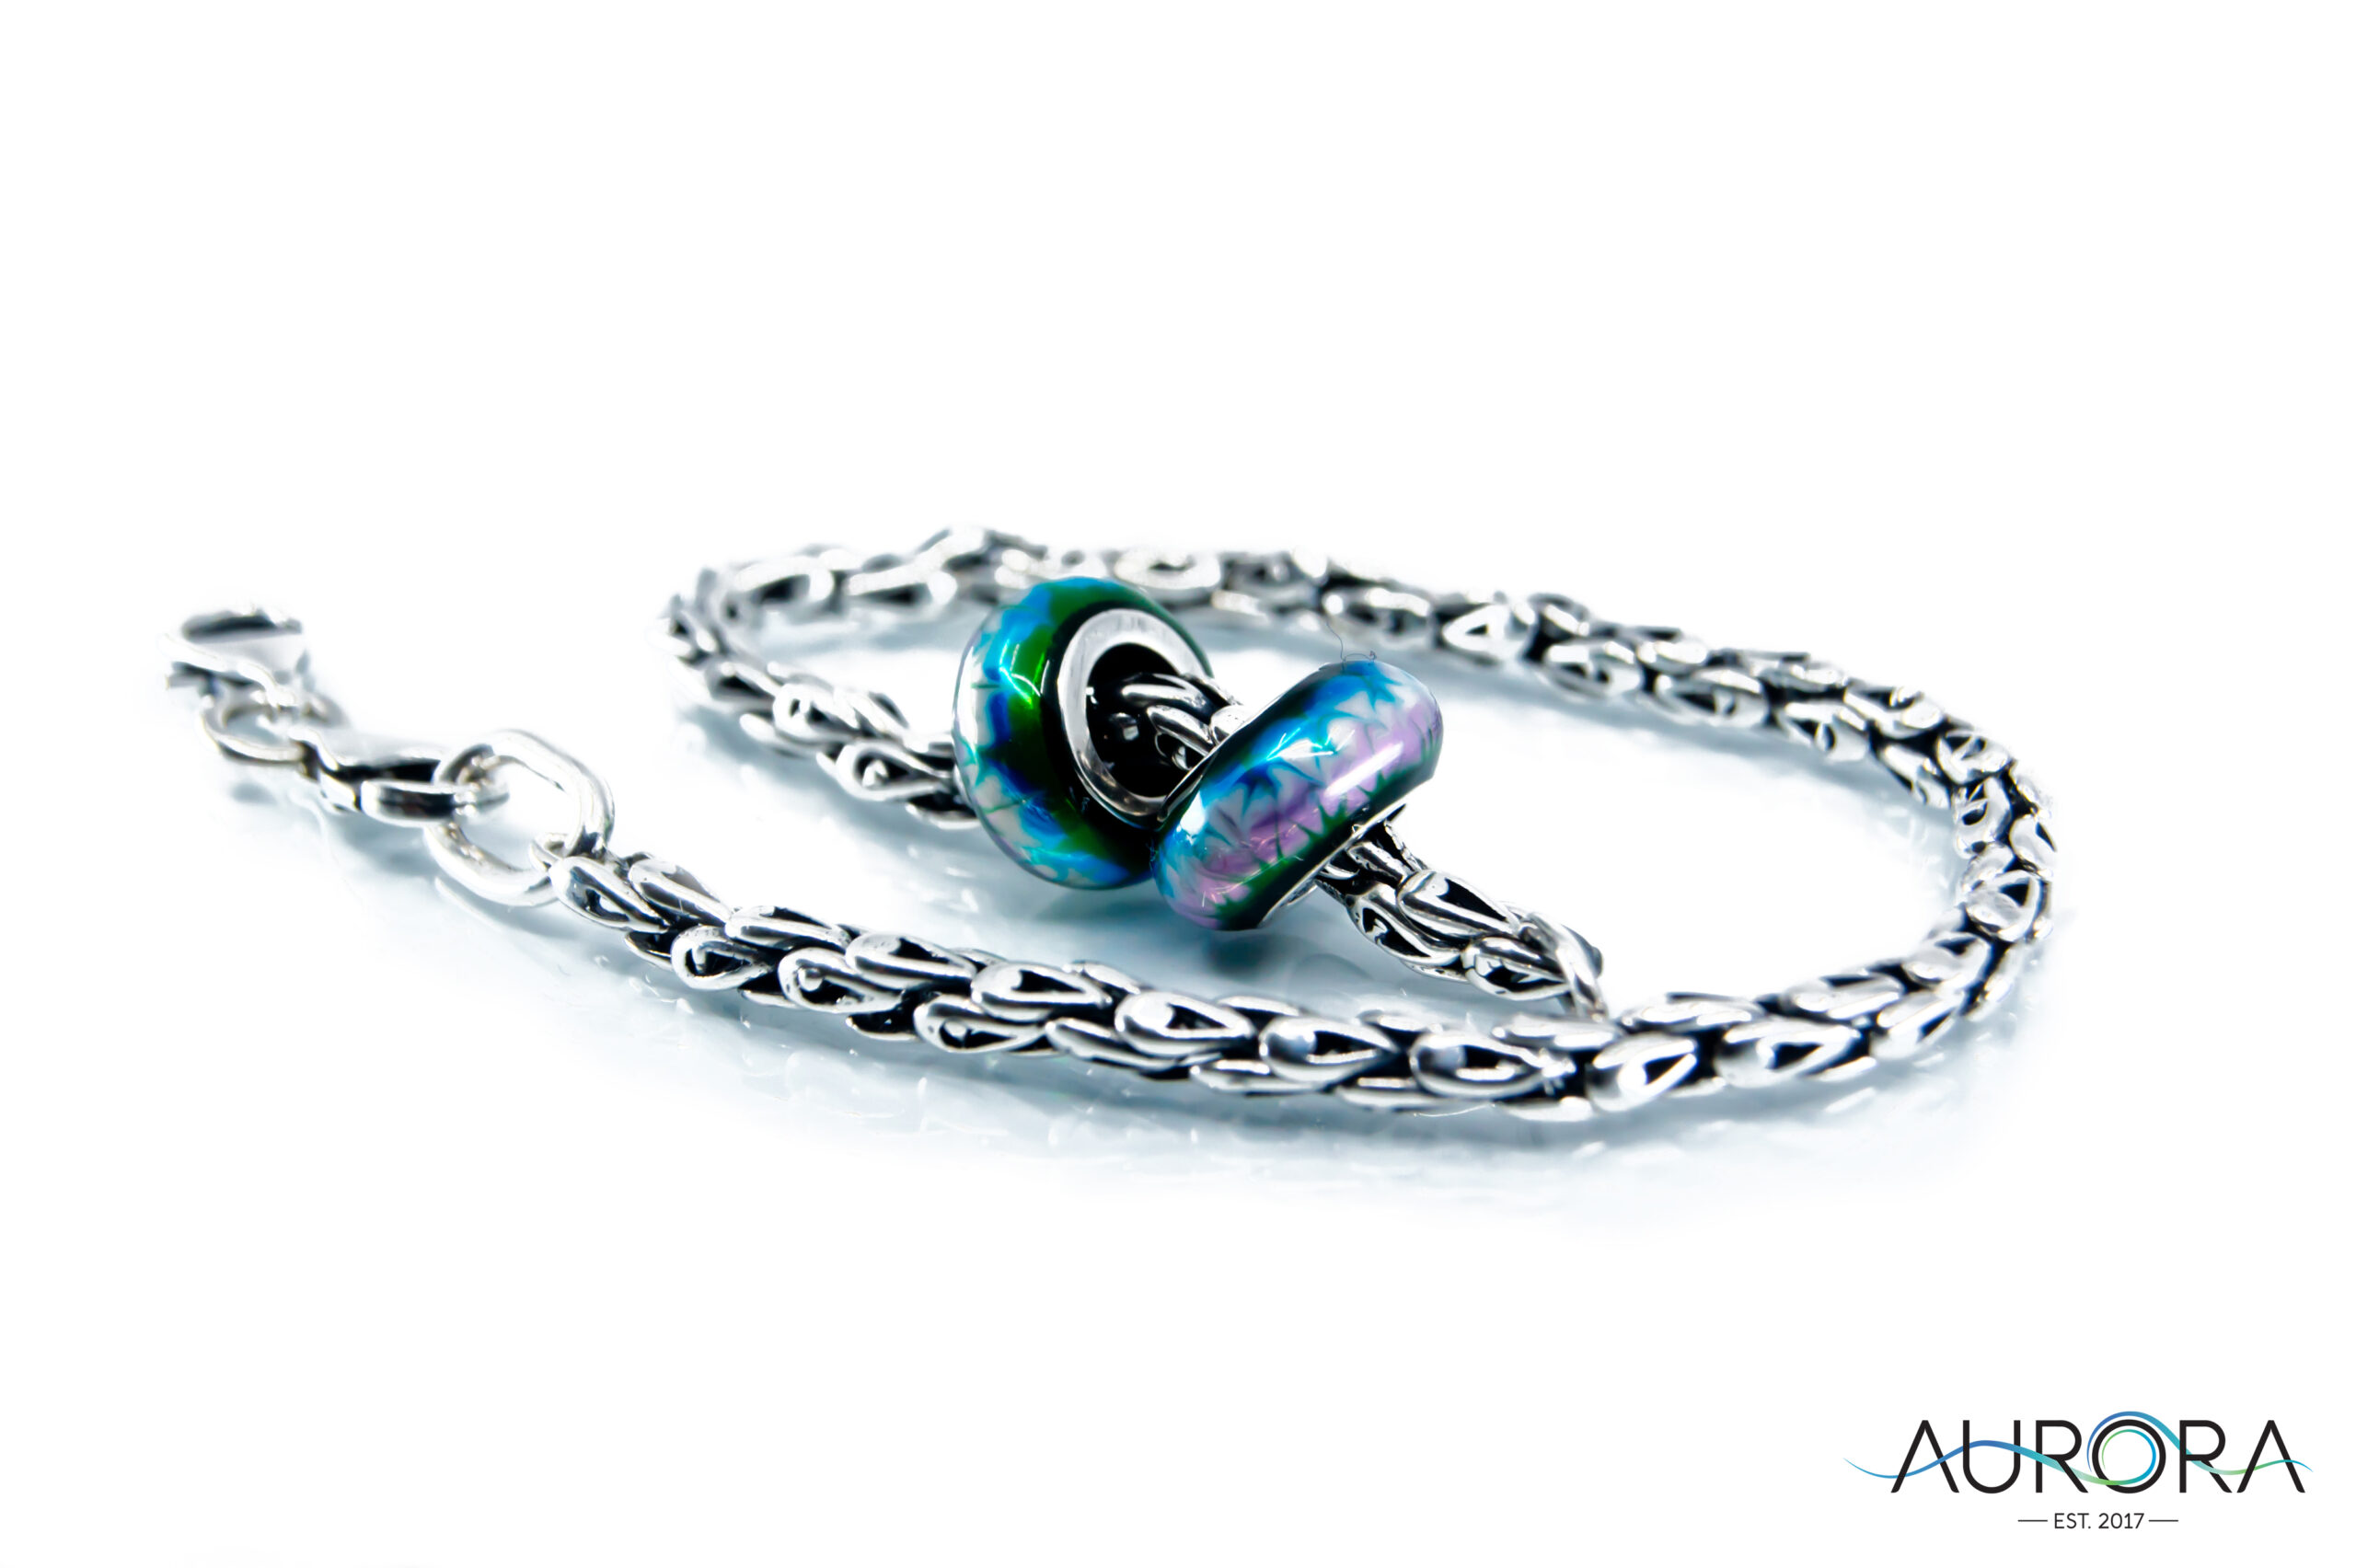 Aurora's Chain Bracelet New Arrival